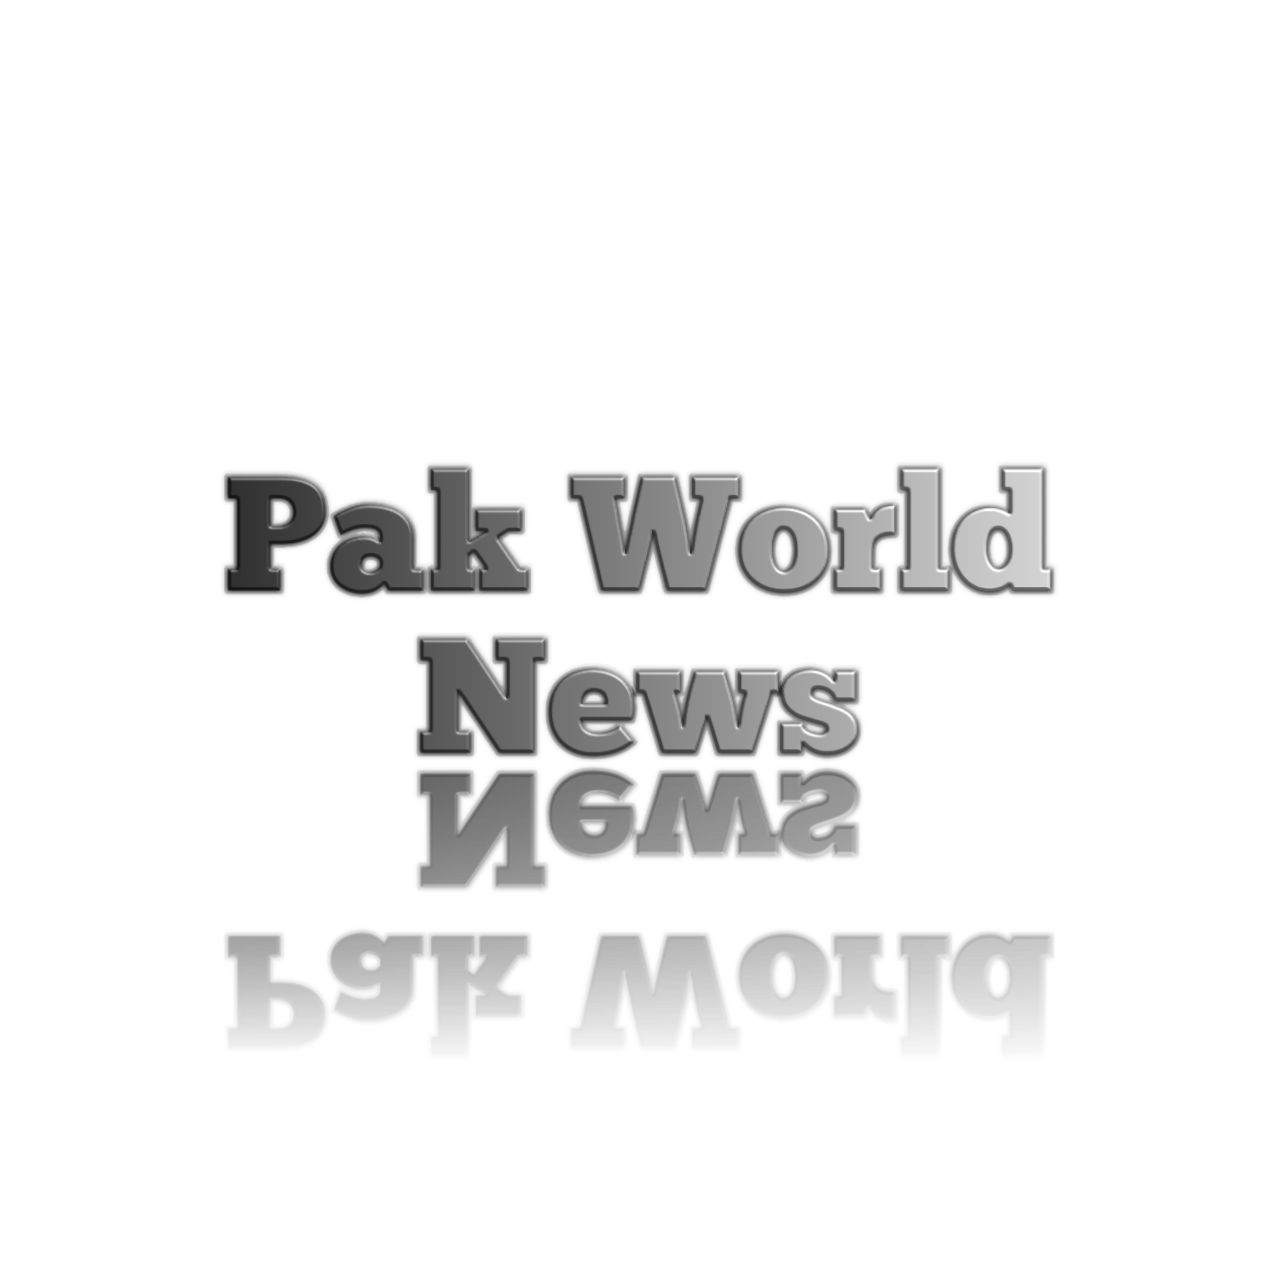 Pak World News